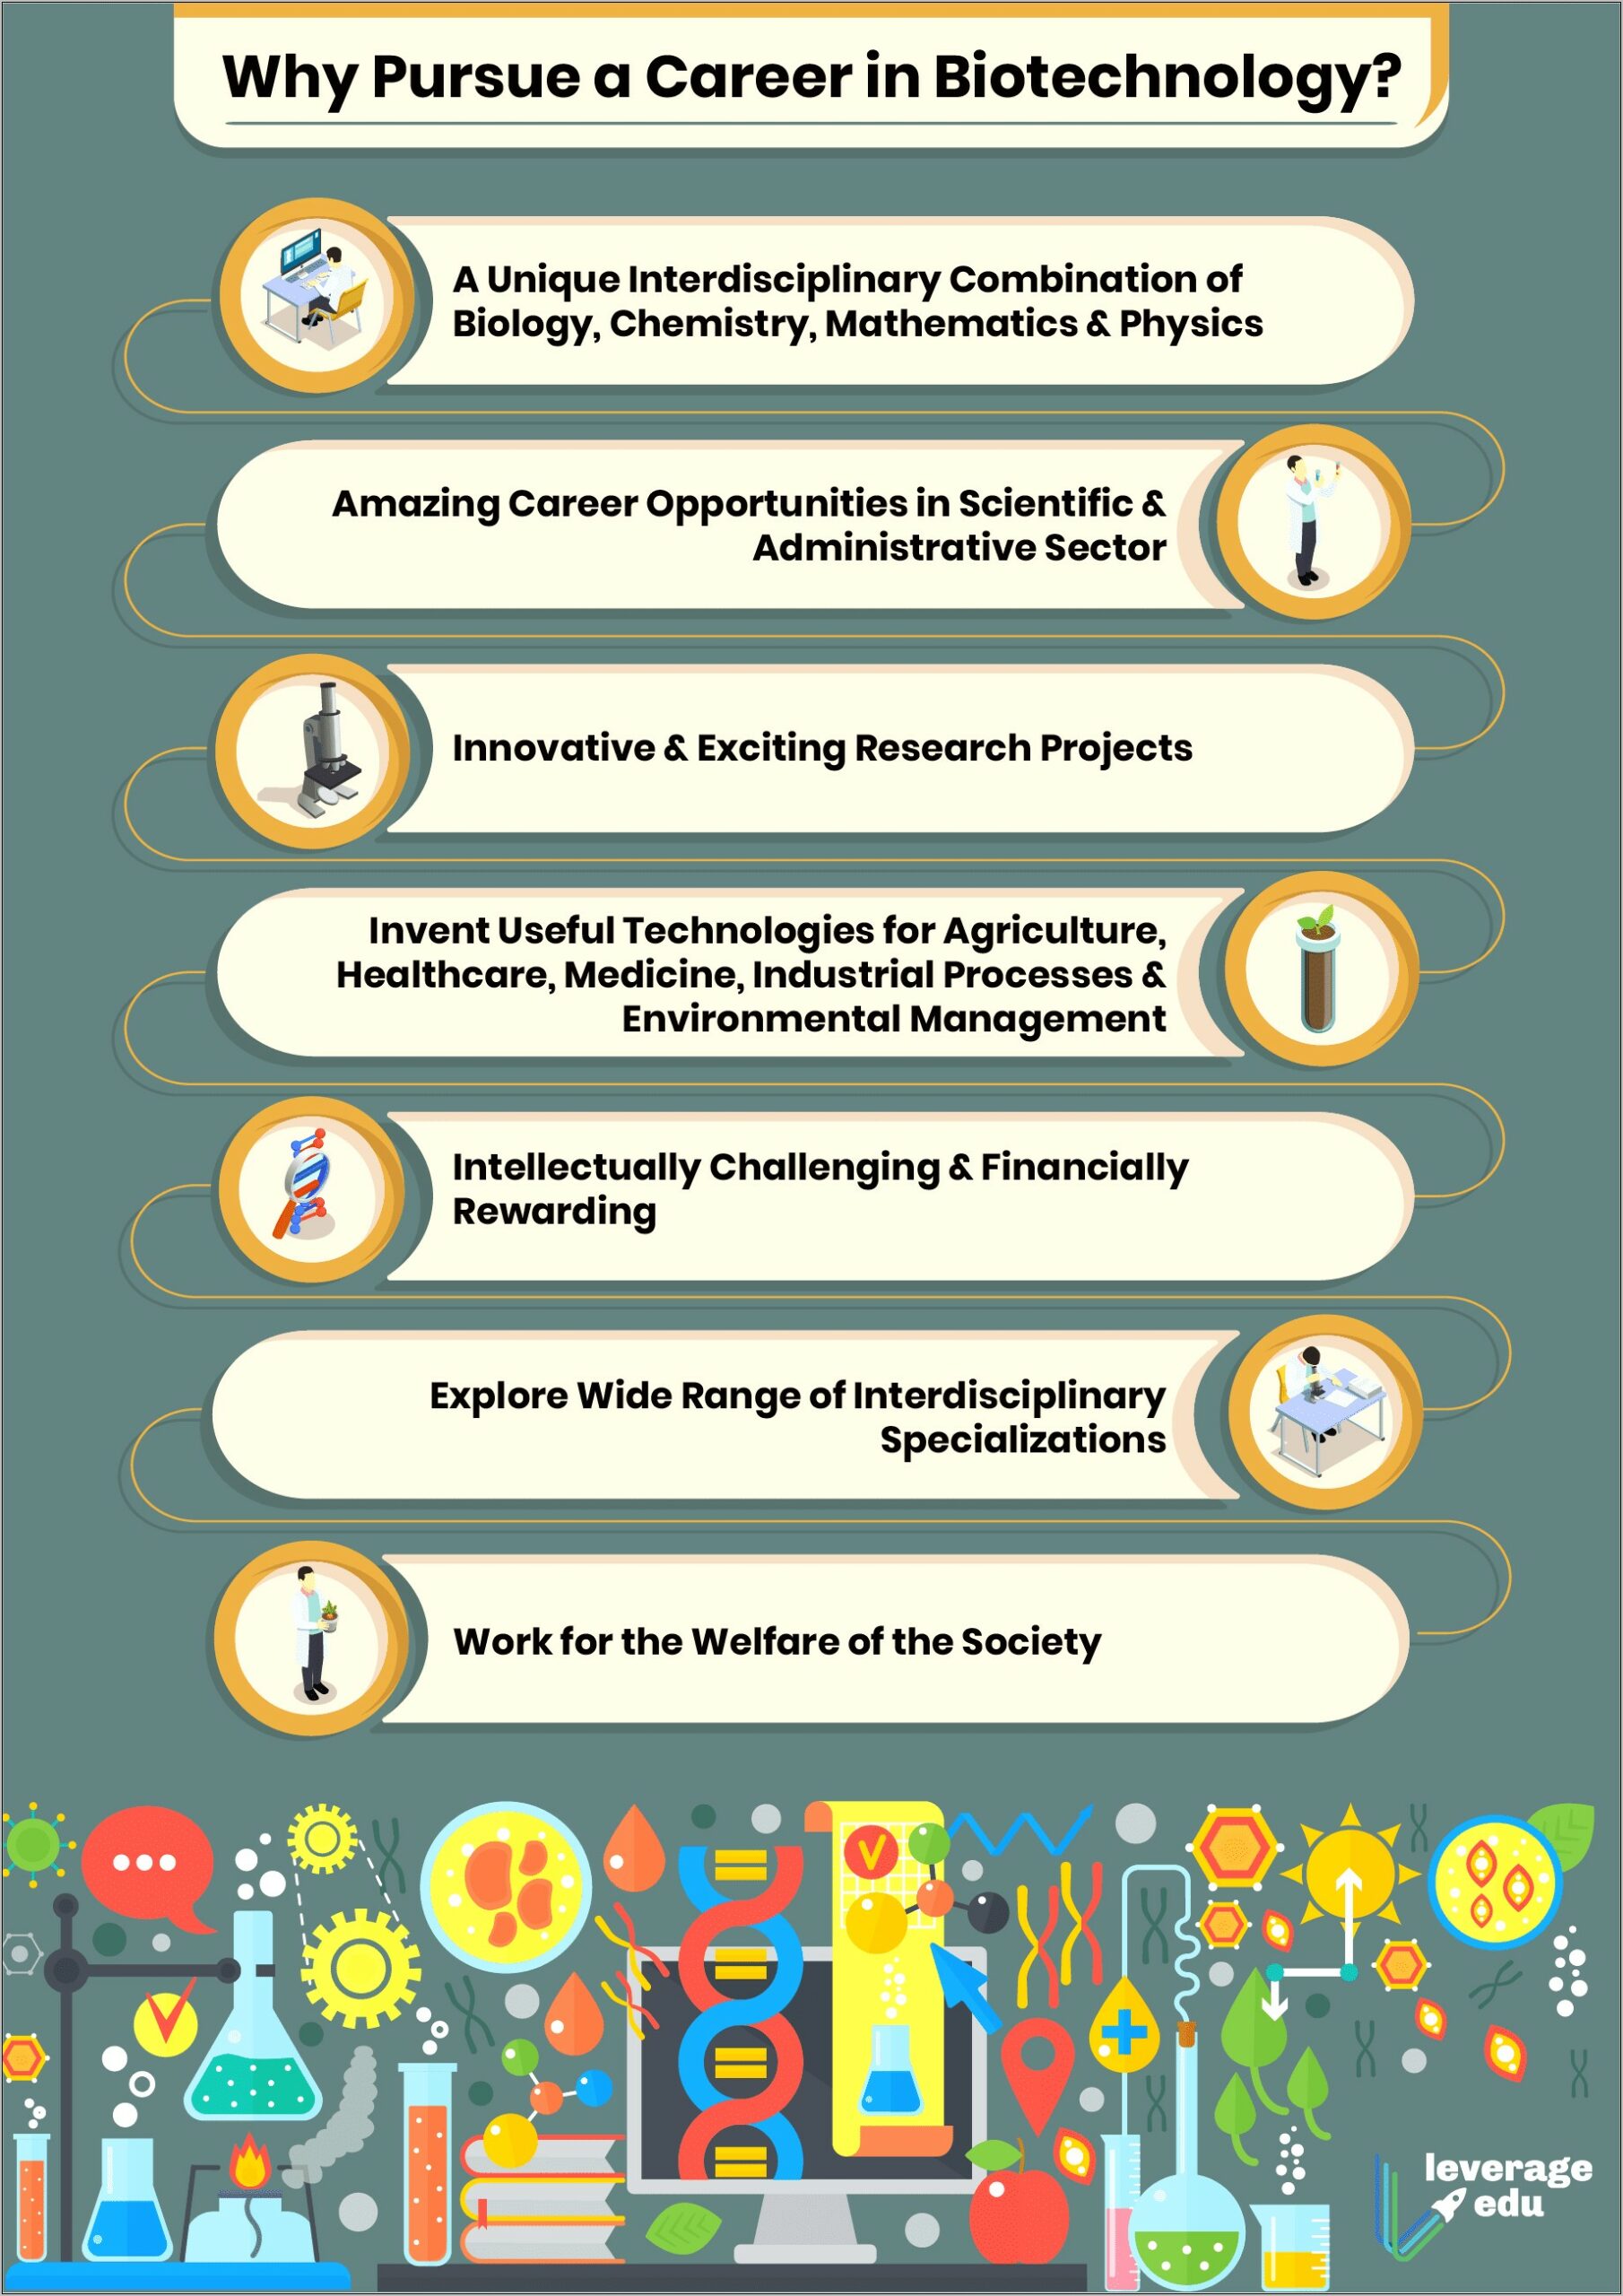 Resume Objective For Biotechnology Job